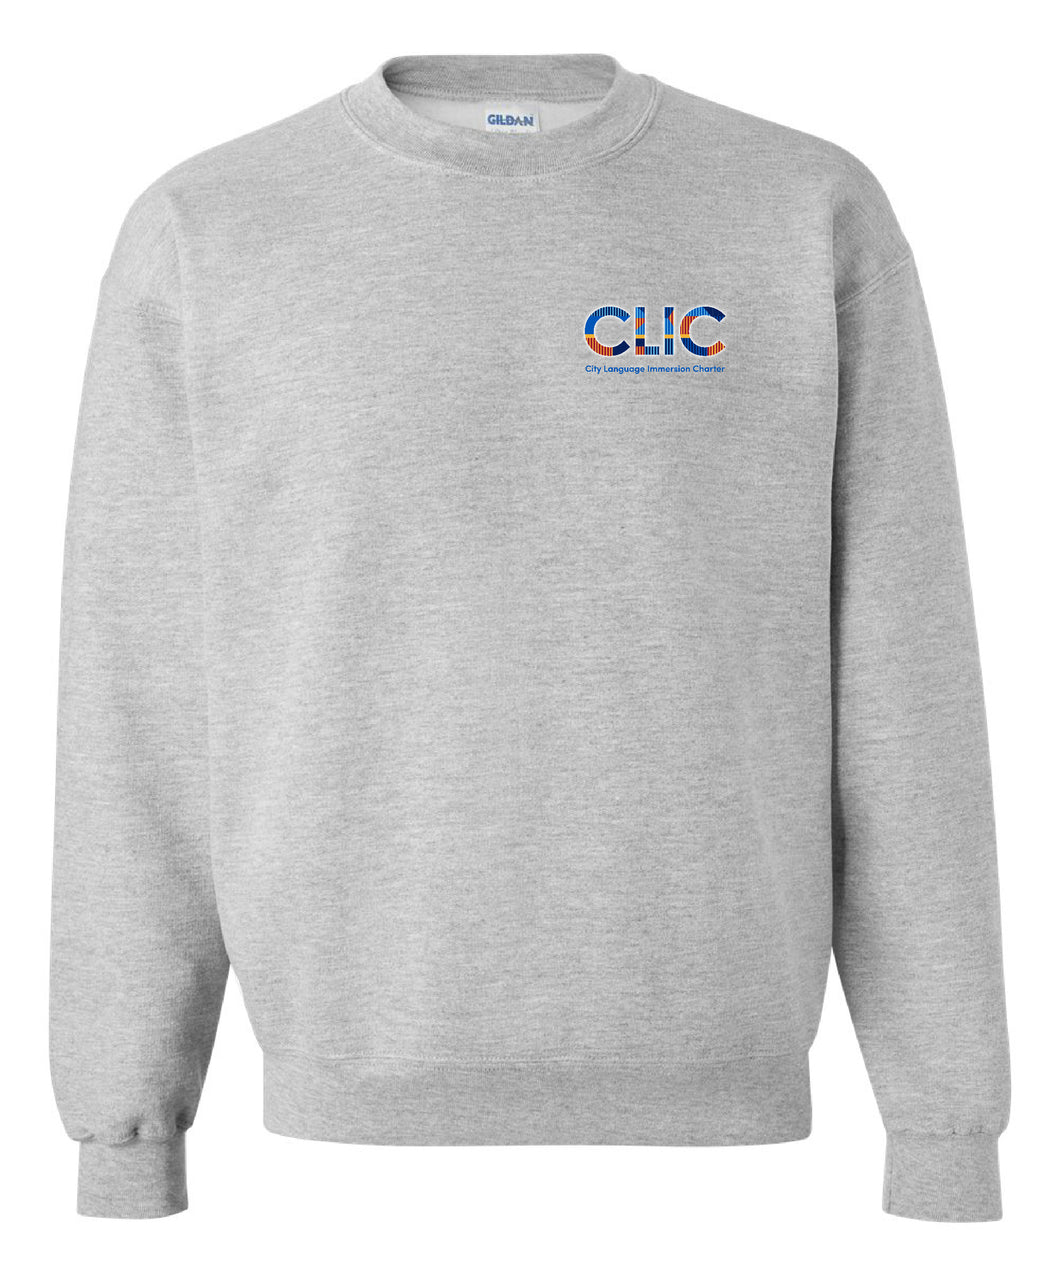 City Language Immersion Charter Crewneck Sweater